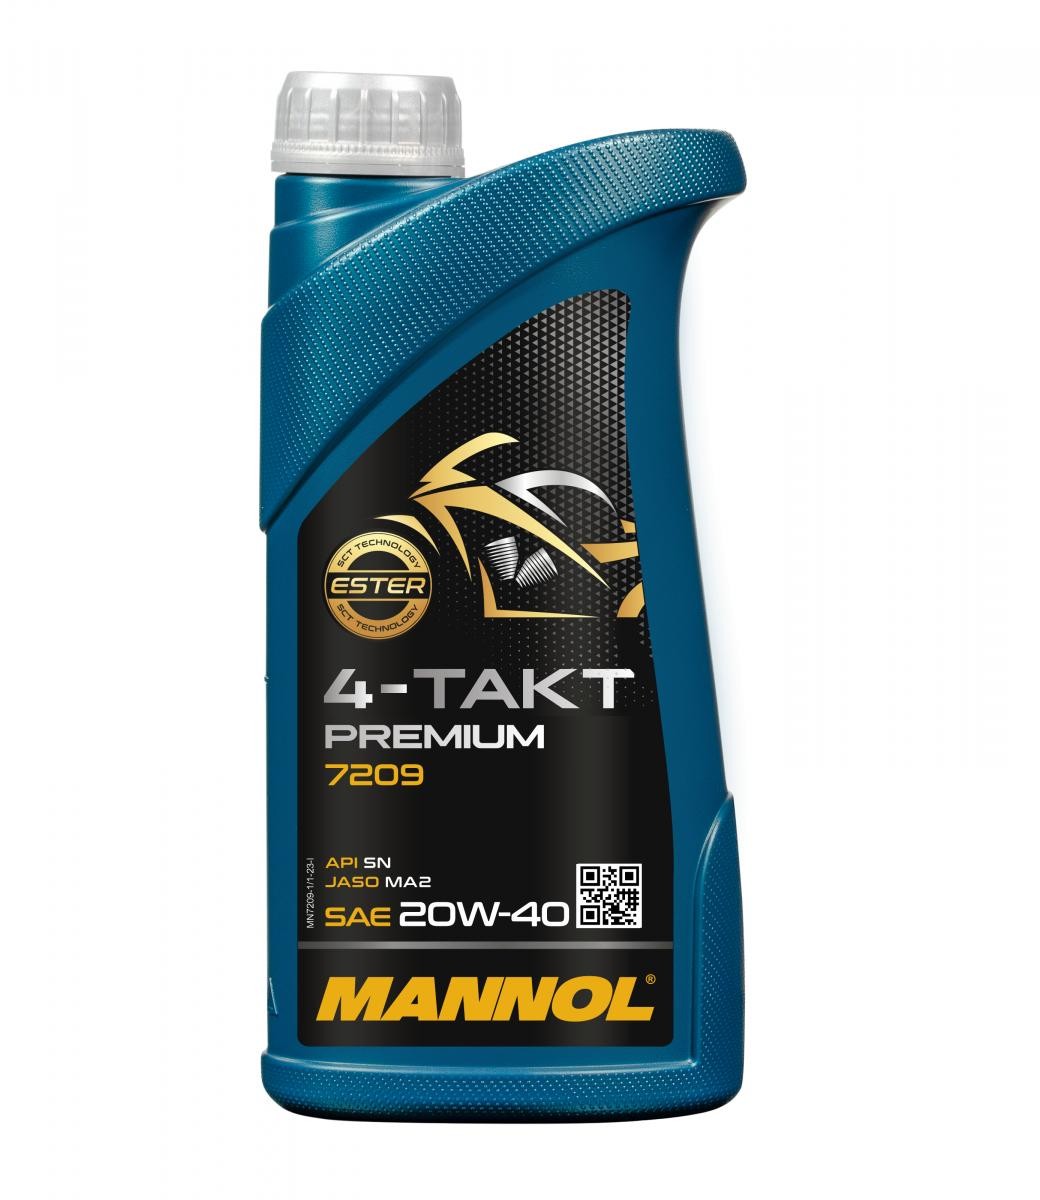 MANNOL Premium 20W-40, 1l Motor oil MN7209-1 buy